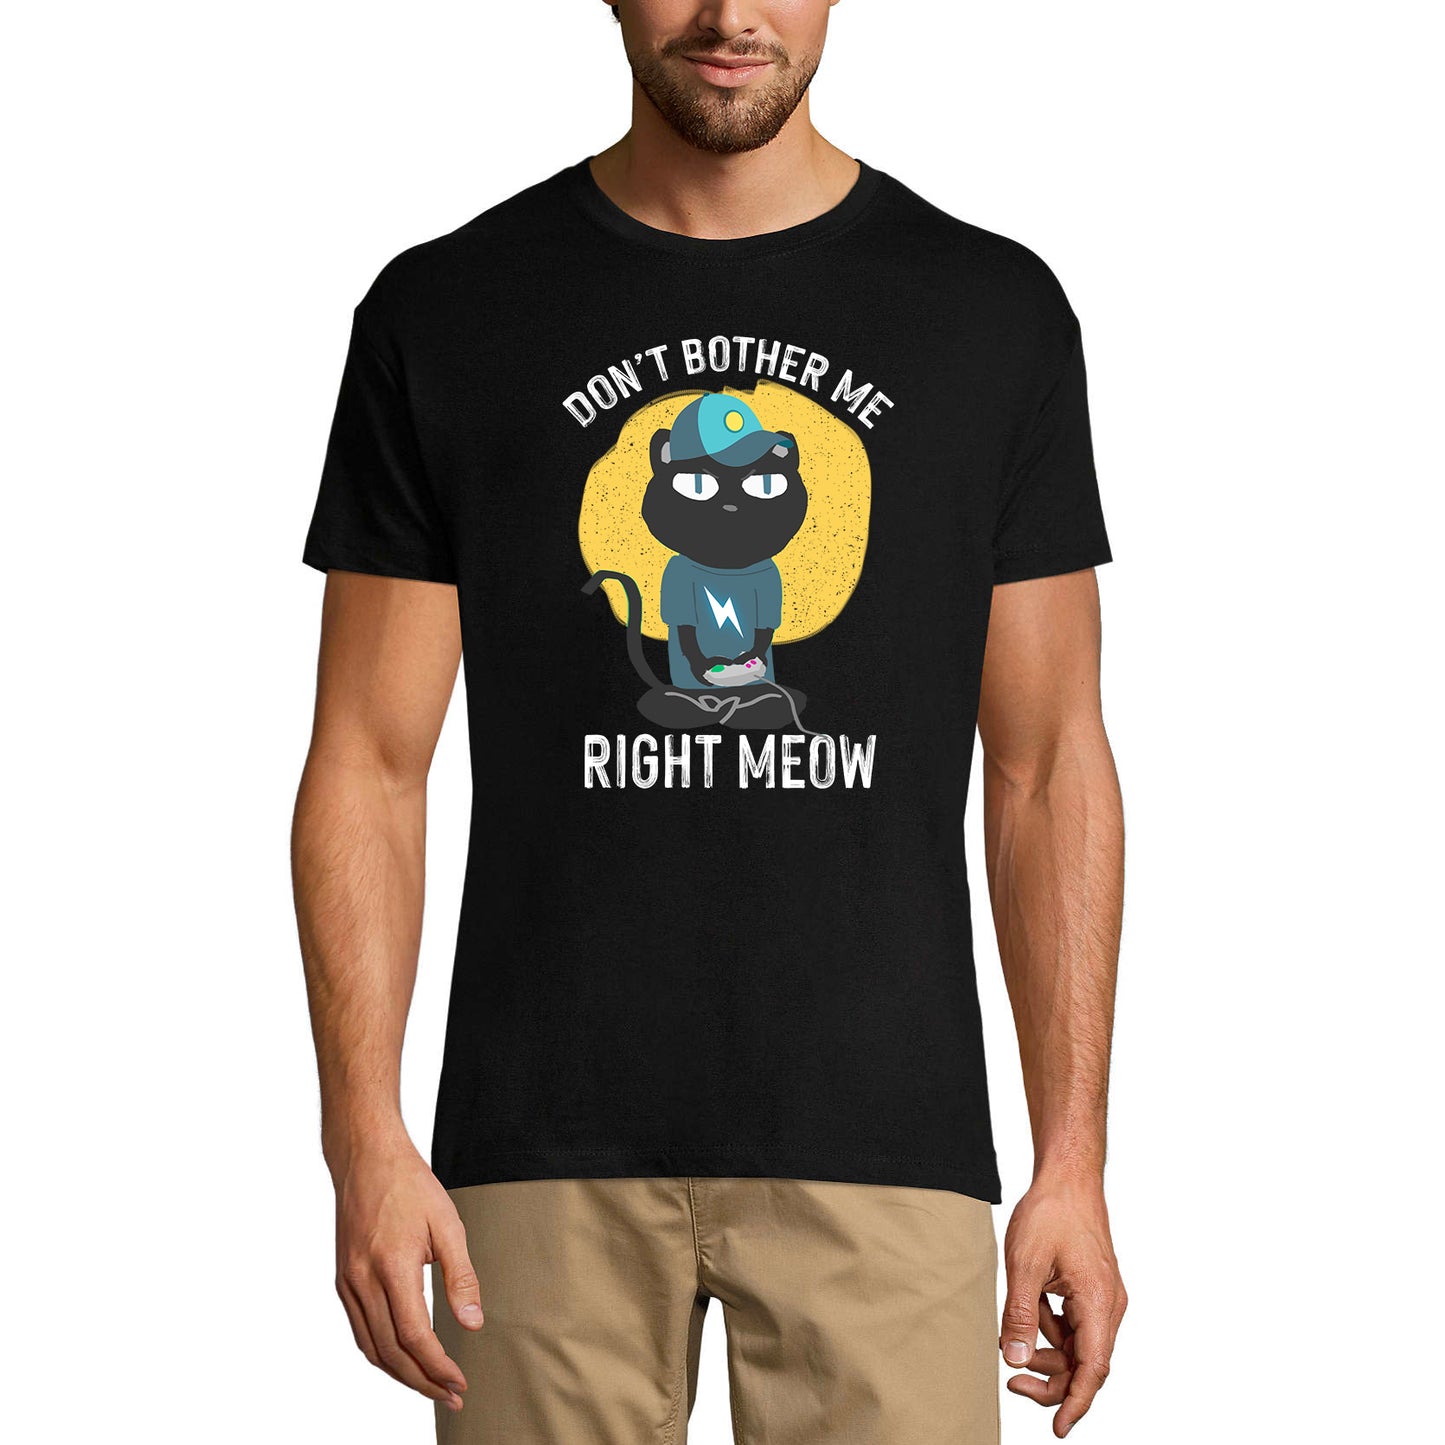 ULTRABASIC Men's T-Shirt Don't Bother Me Right Meow - Funny Cat Shirt - Cat Gamer